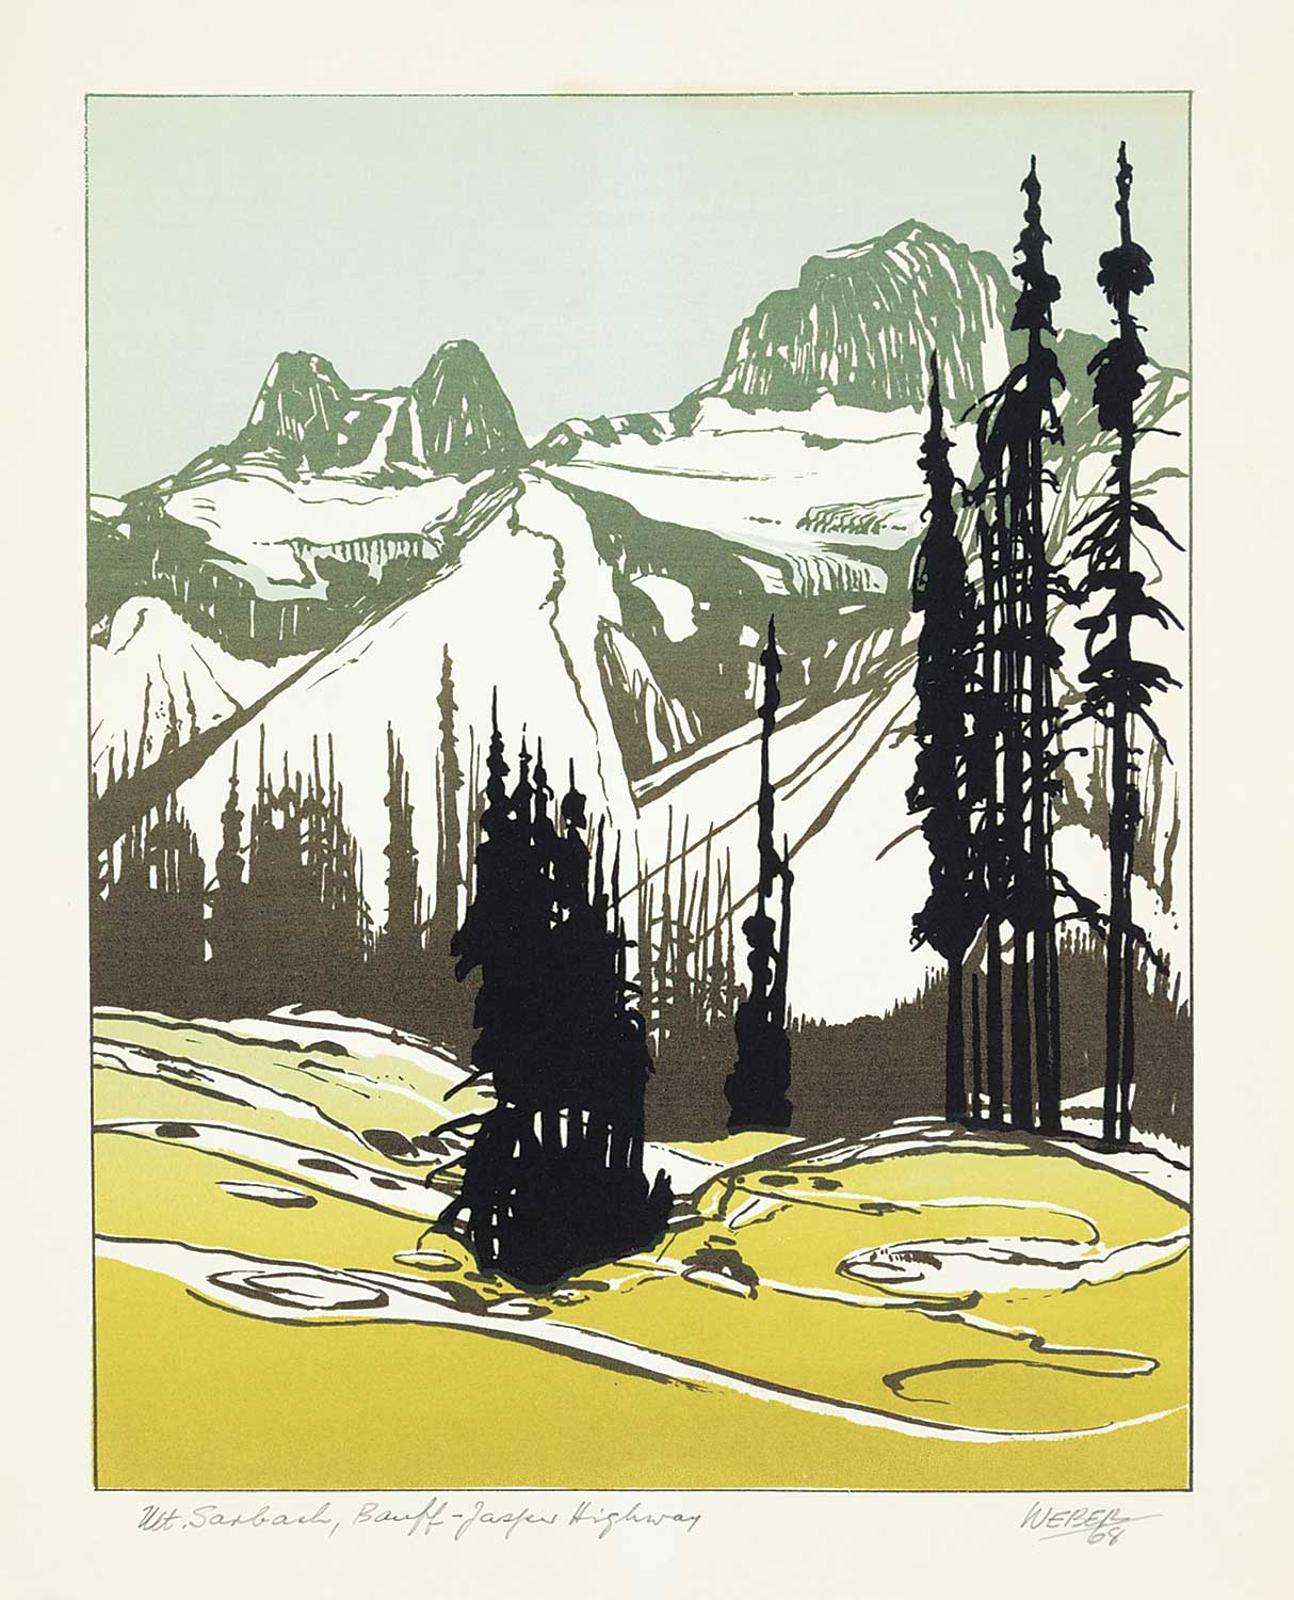 George Weber (1907-2002) - Mt. Sawback, Banff - Jasper Highway